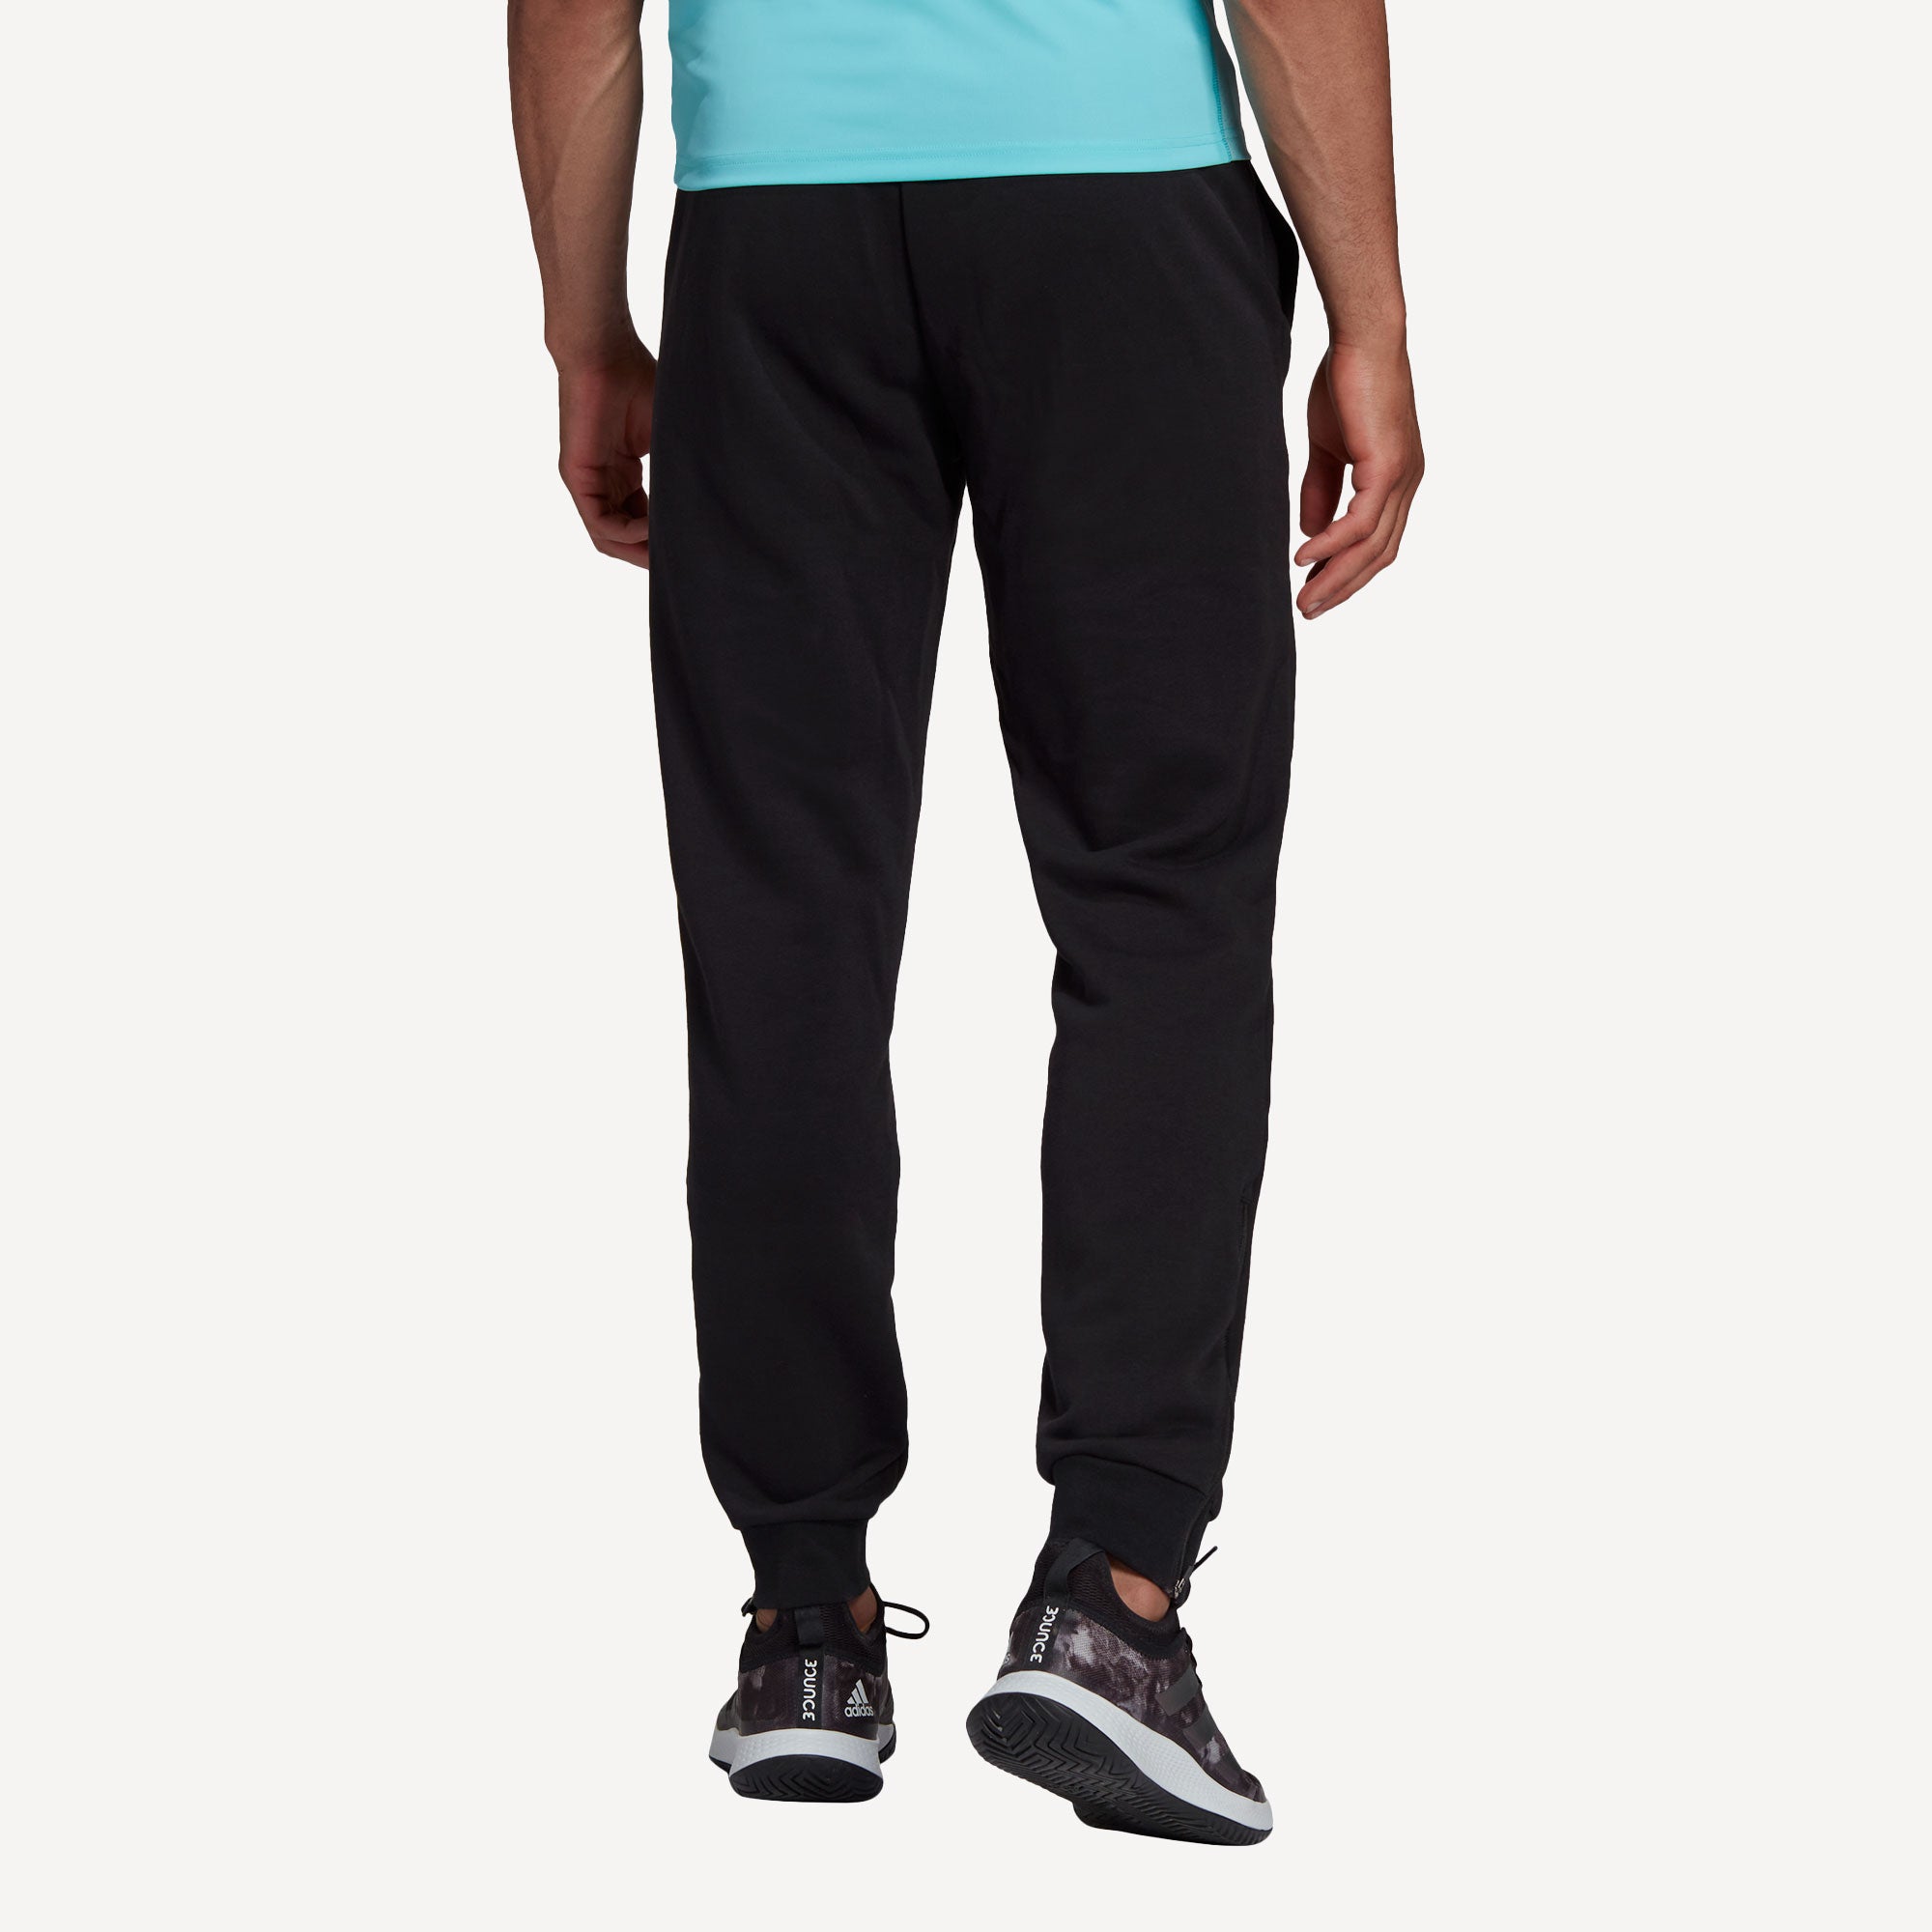 adidas Men's Graphic Tennis Pants Black (2)